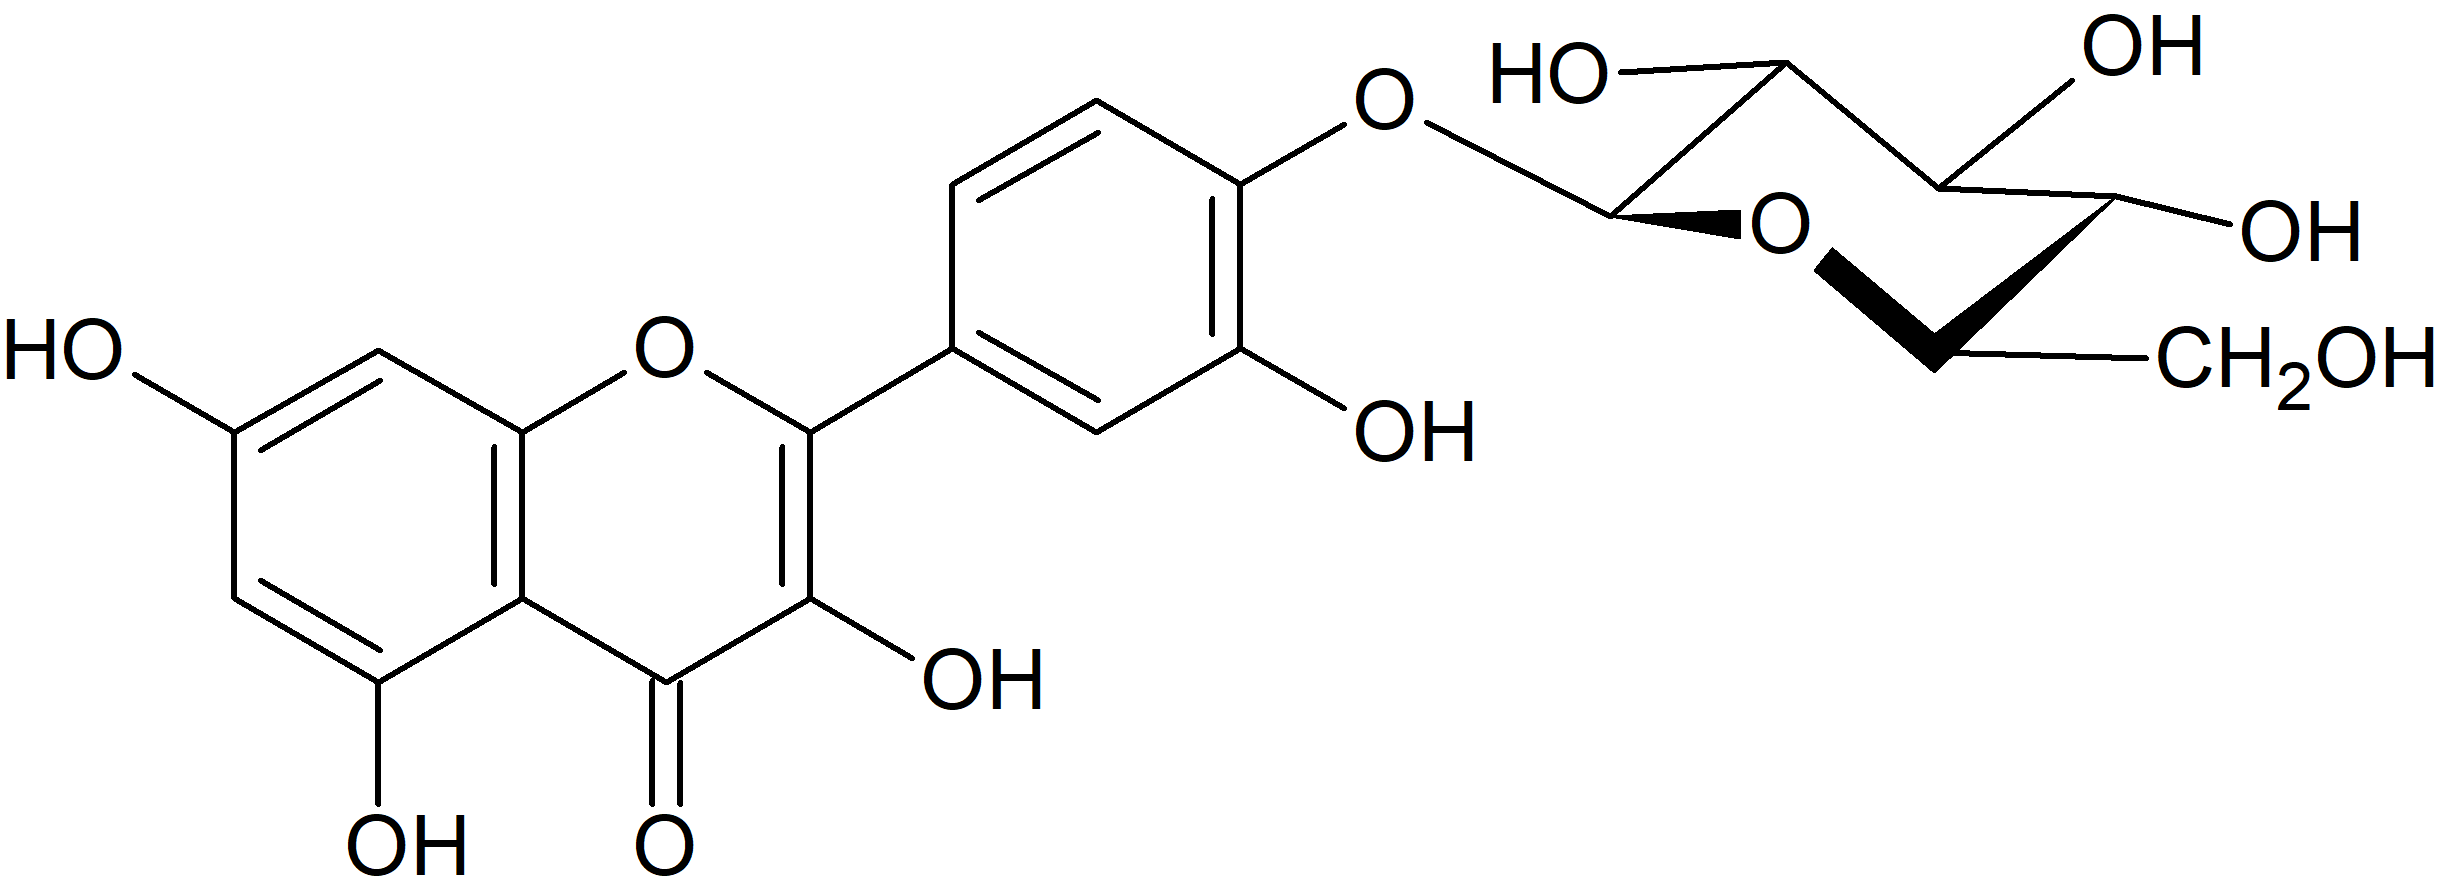 Quercetin 4'-O-glucoside